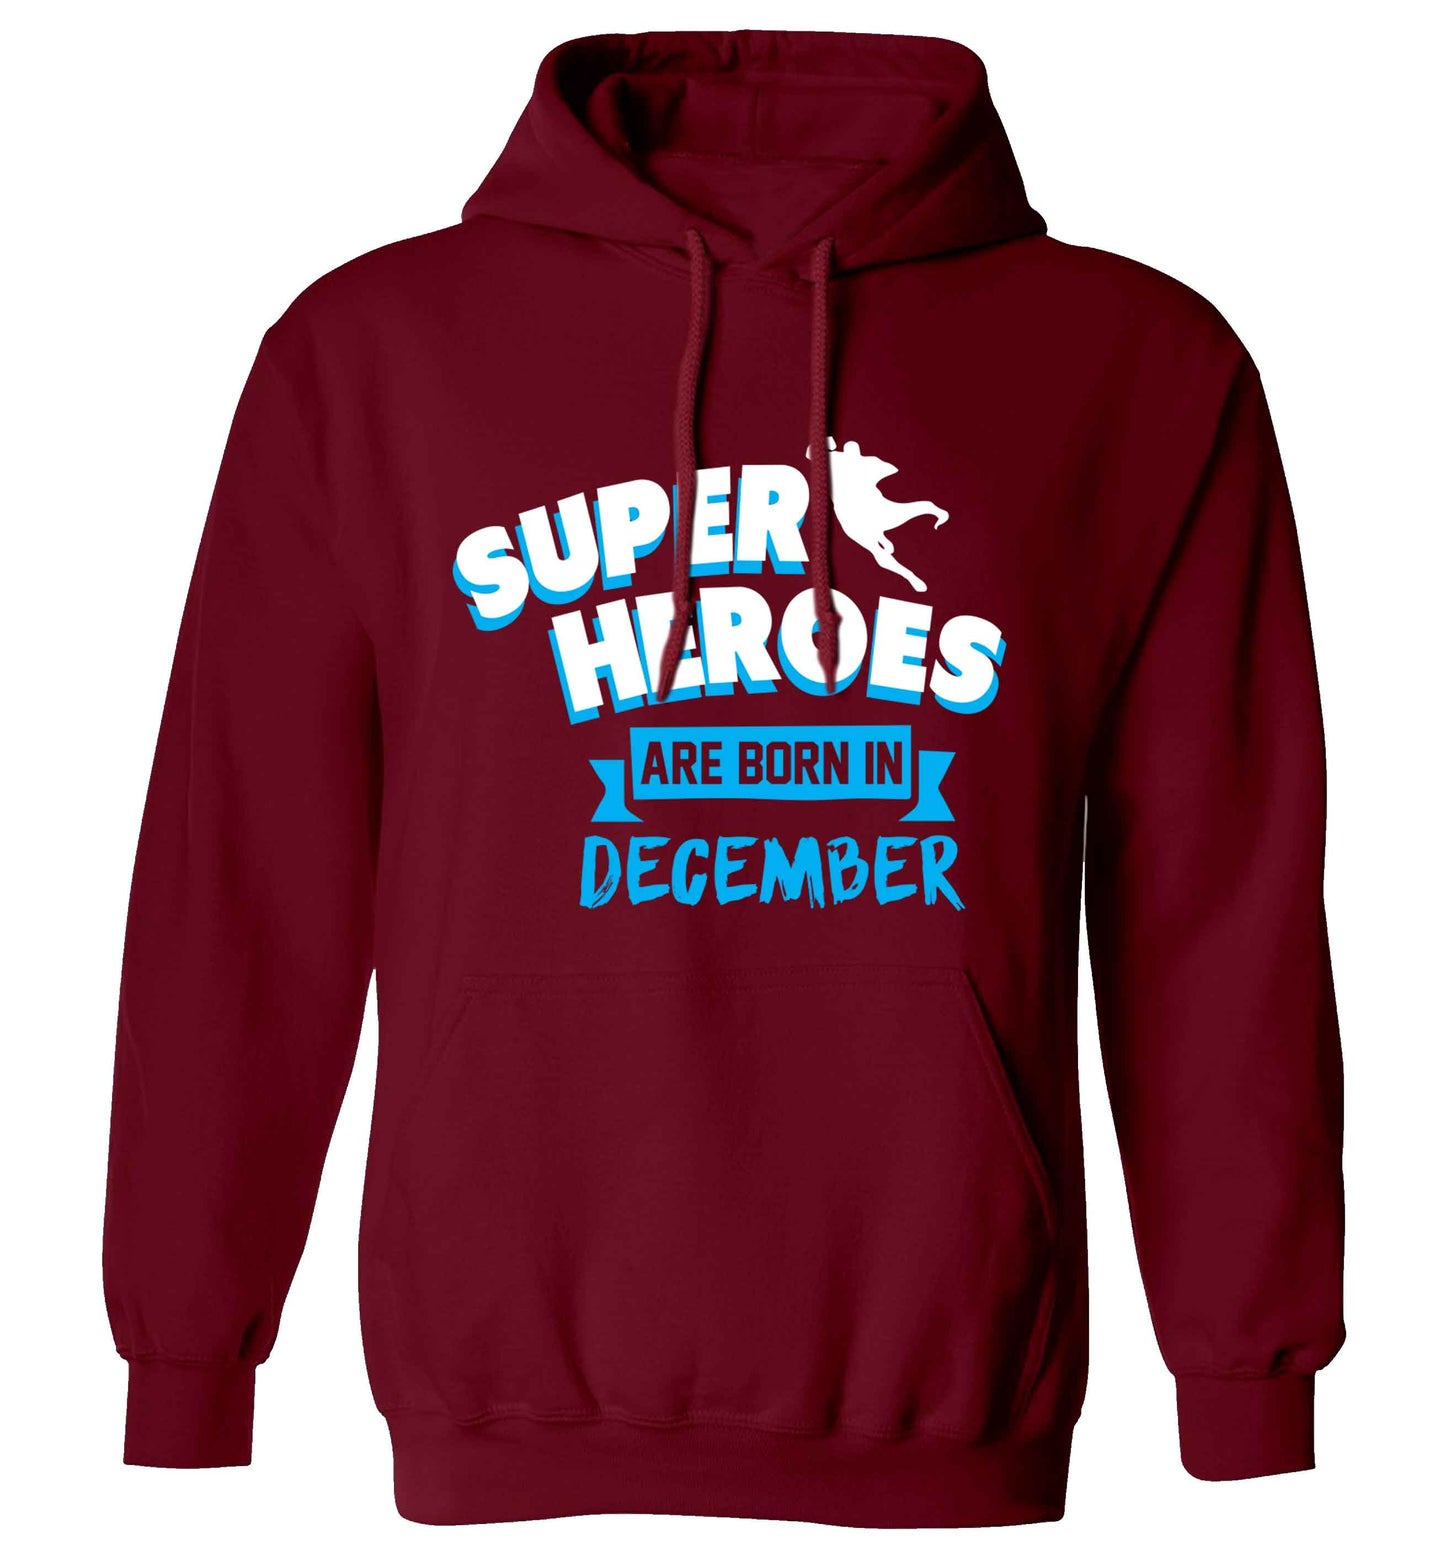 Superheroes are born in December adults unisex maroon hoodie 2XL